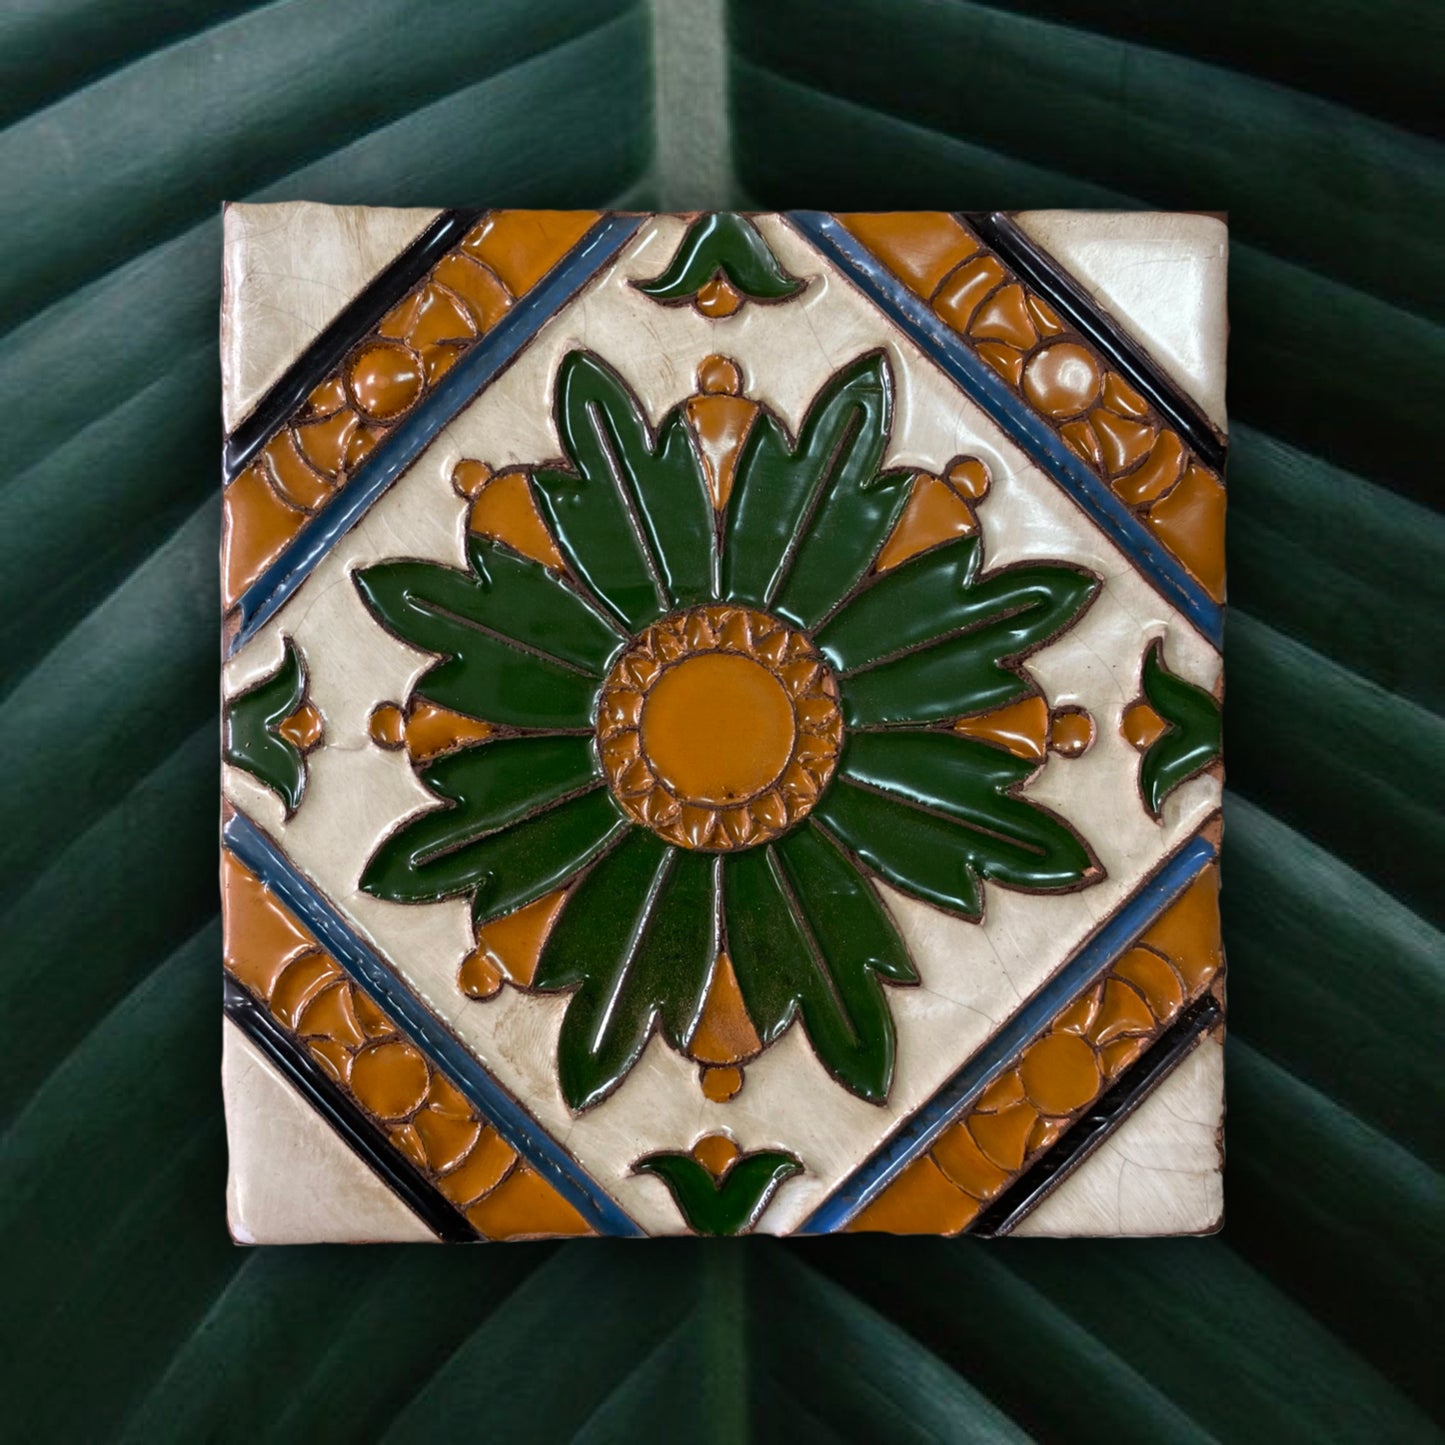 Tile Renaissance Arista Flower and Heading REF7